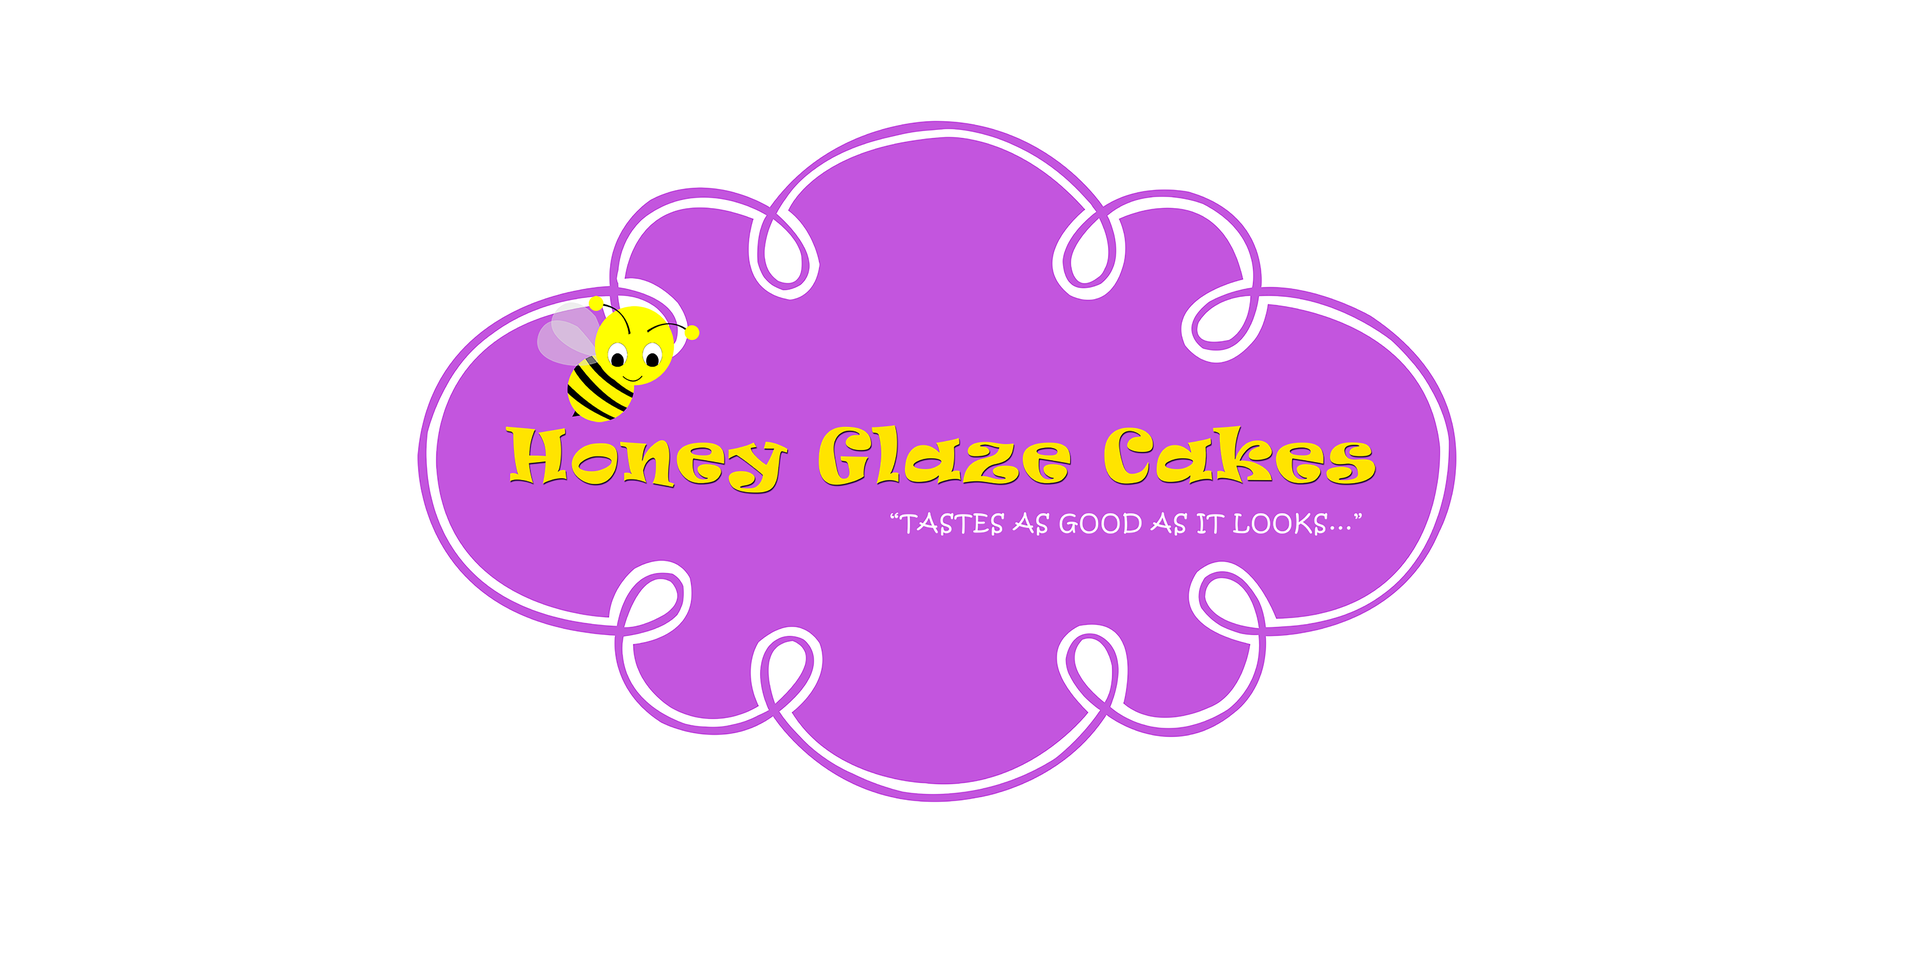 Honey Glaze Cakes